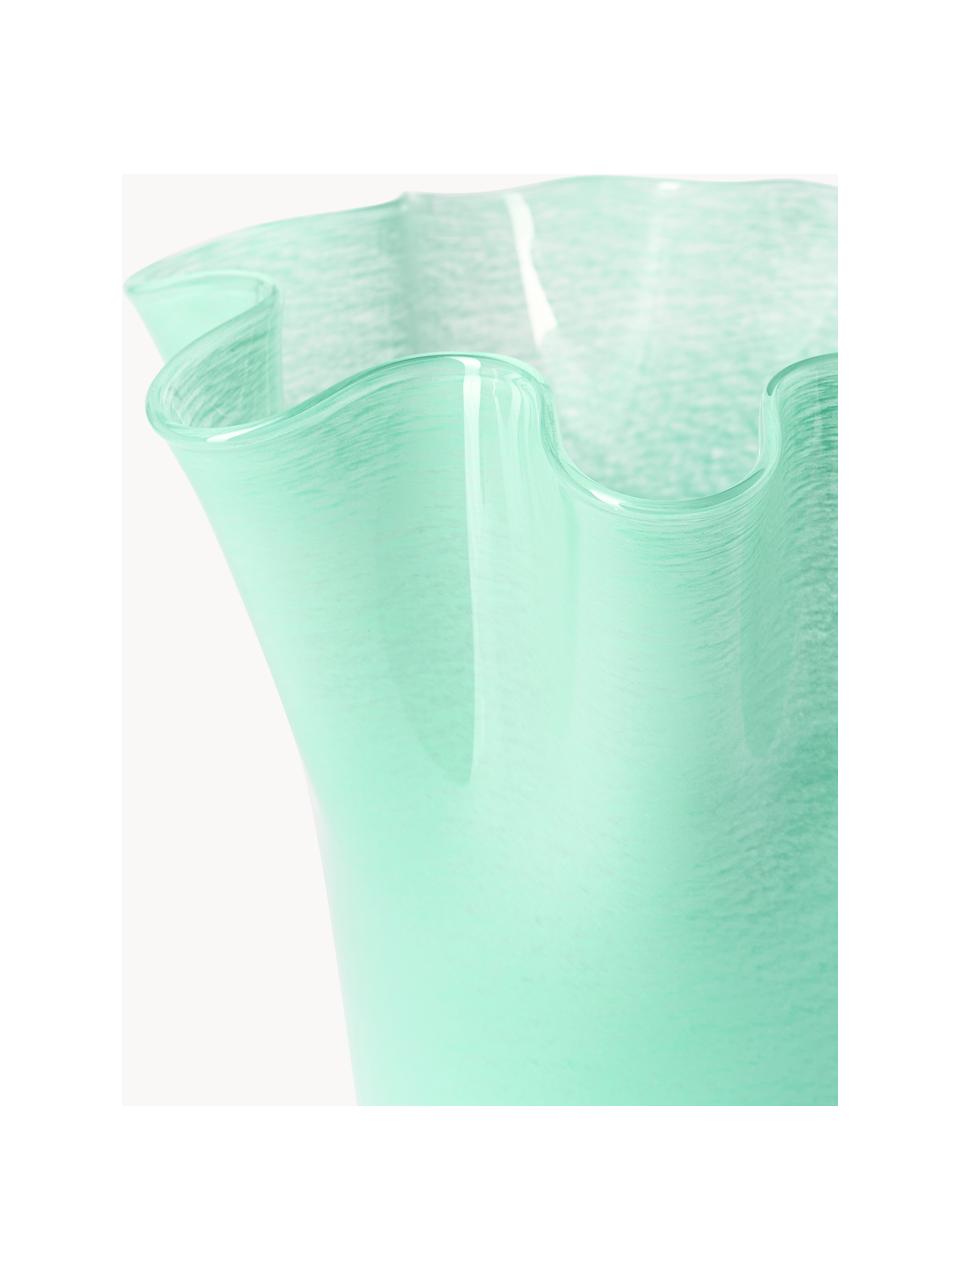 Mondgeblazen glazen vaas Inaya, Mondgeblazen glas, Turquoise groen, Ø 29 x H 31 cm